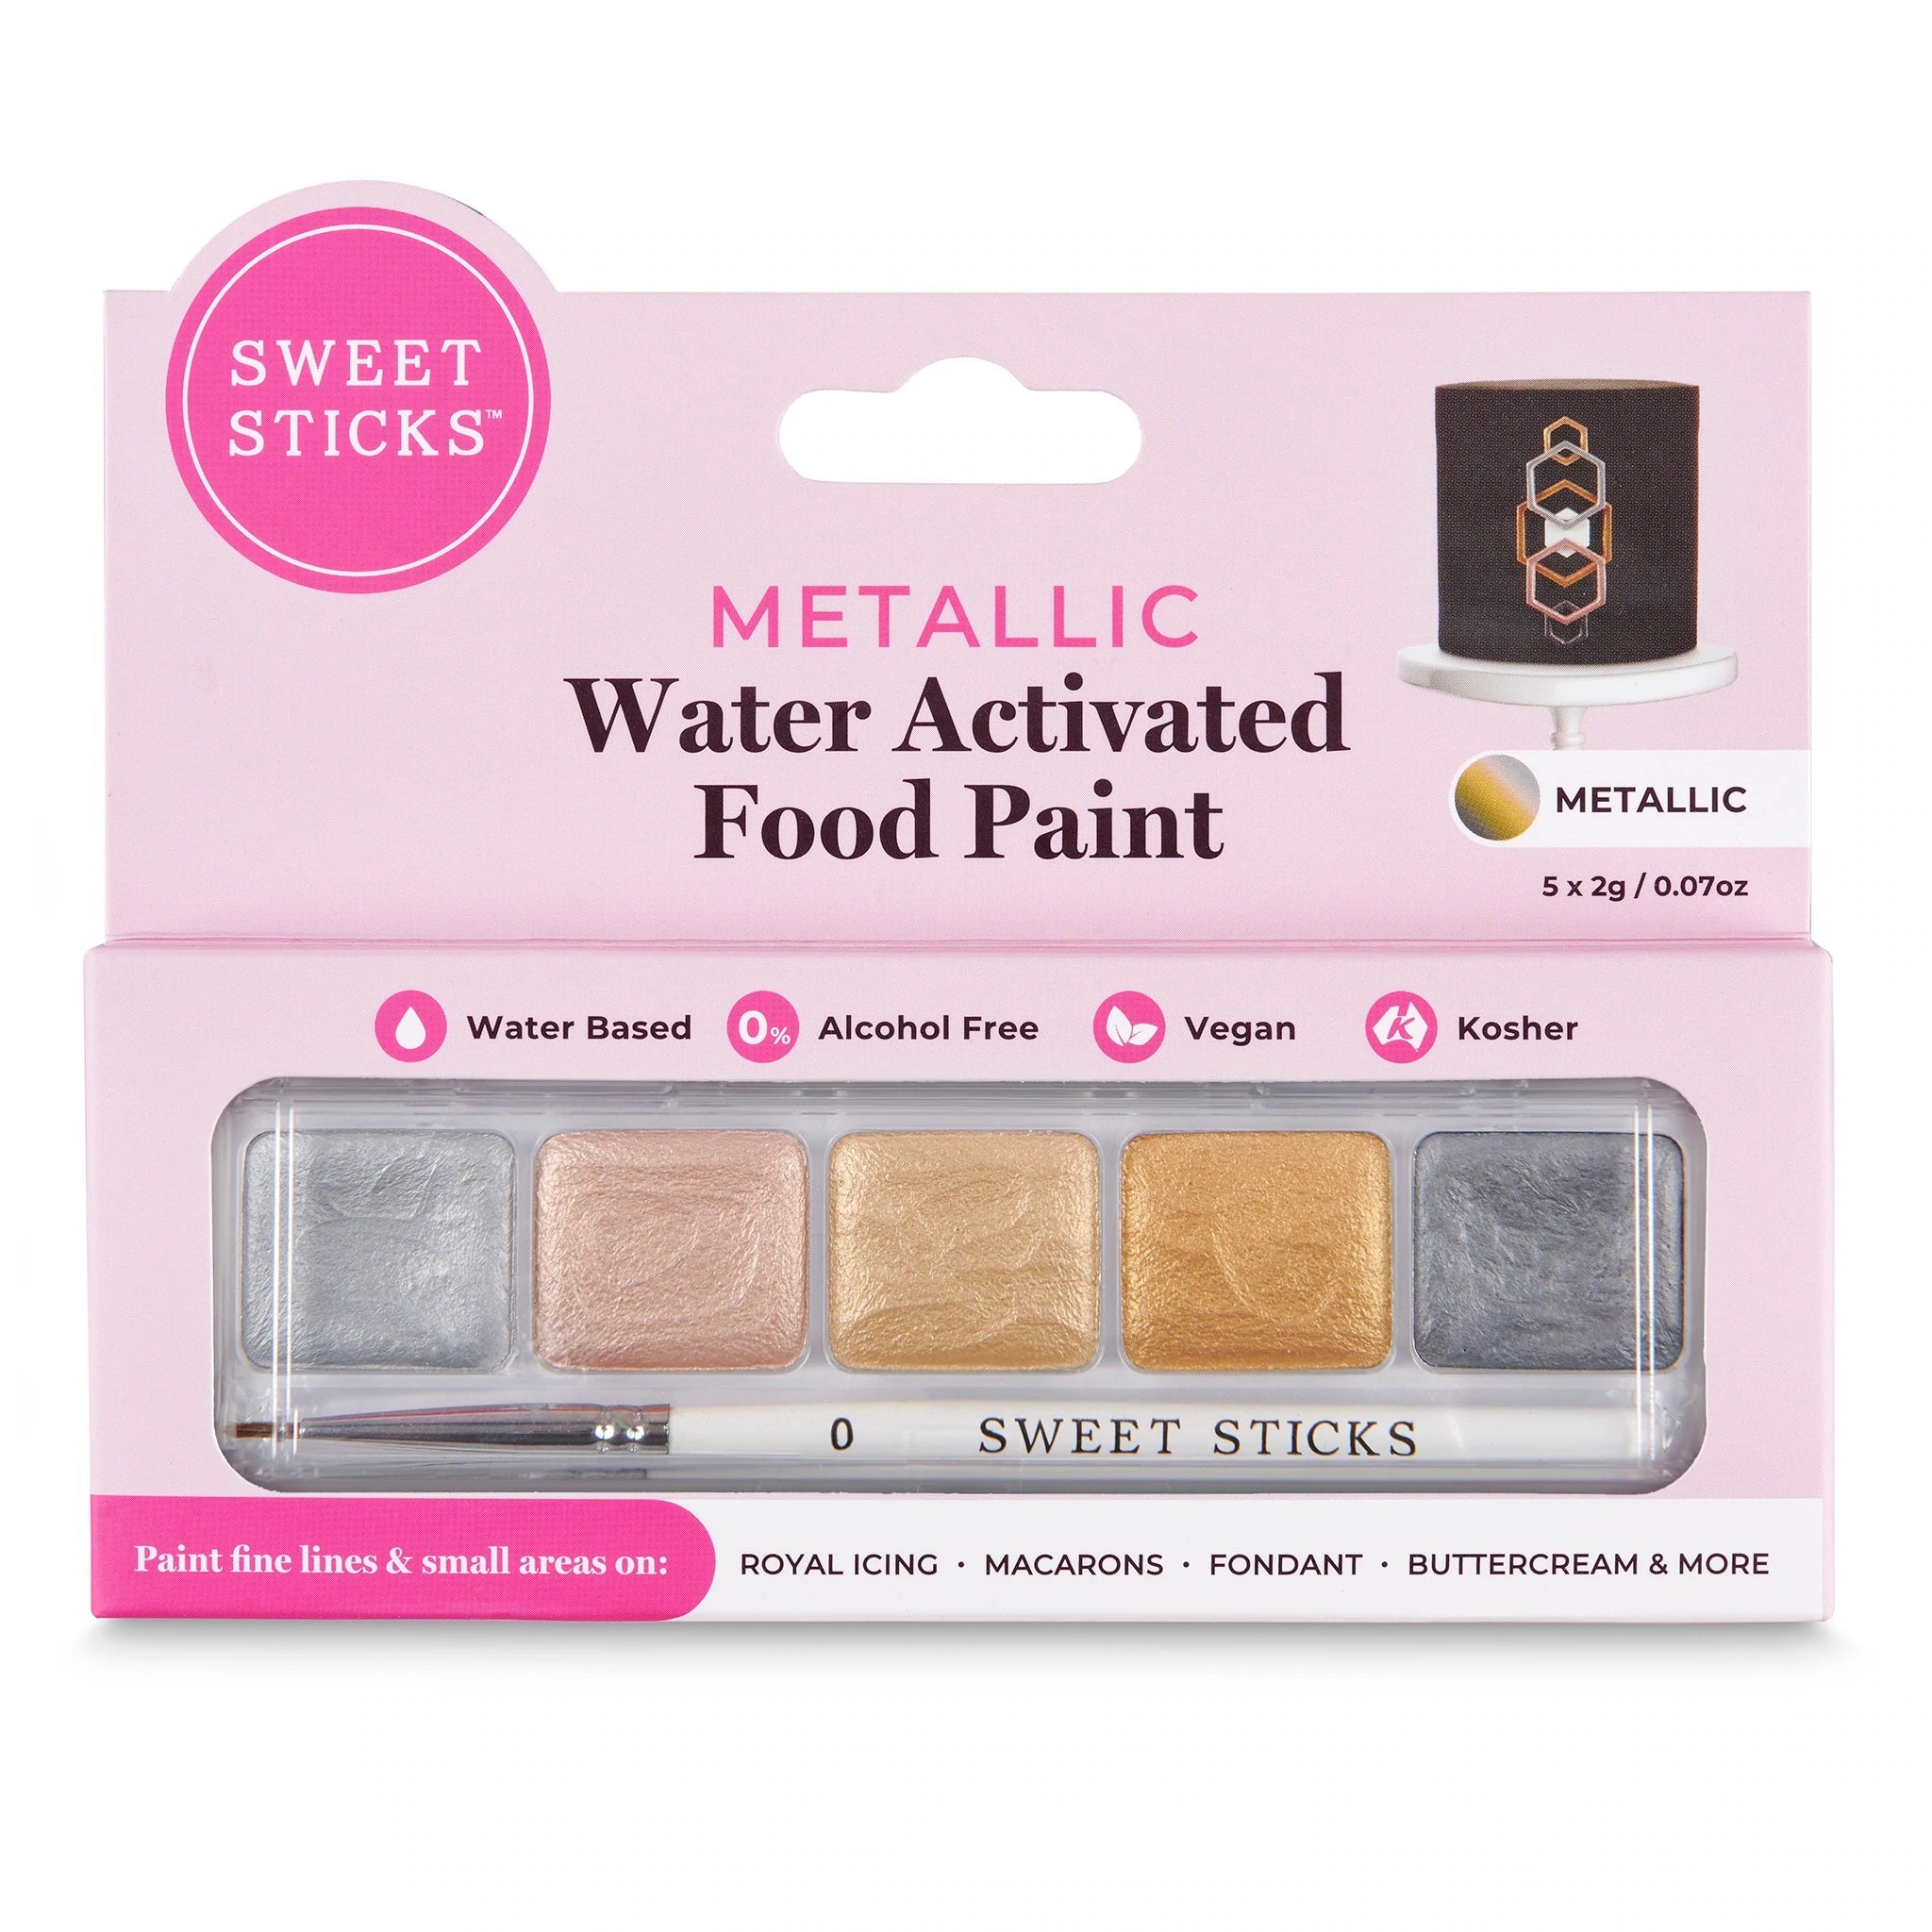 Edible Art 'Metallics' Water Activated Food Paint Palette by Sweet Sticks - Metallic - Kate's Cupboard